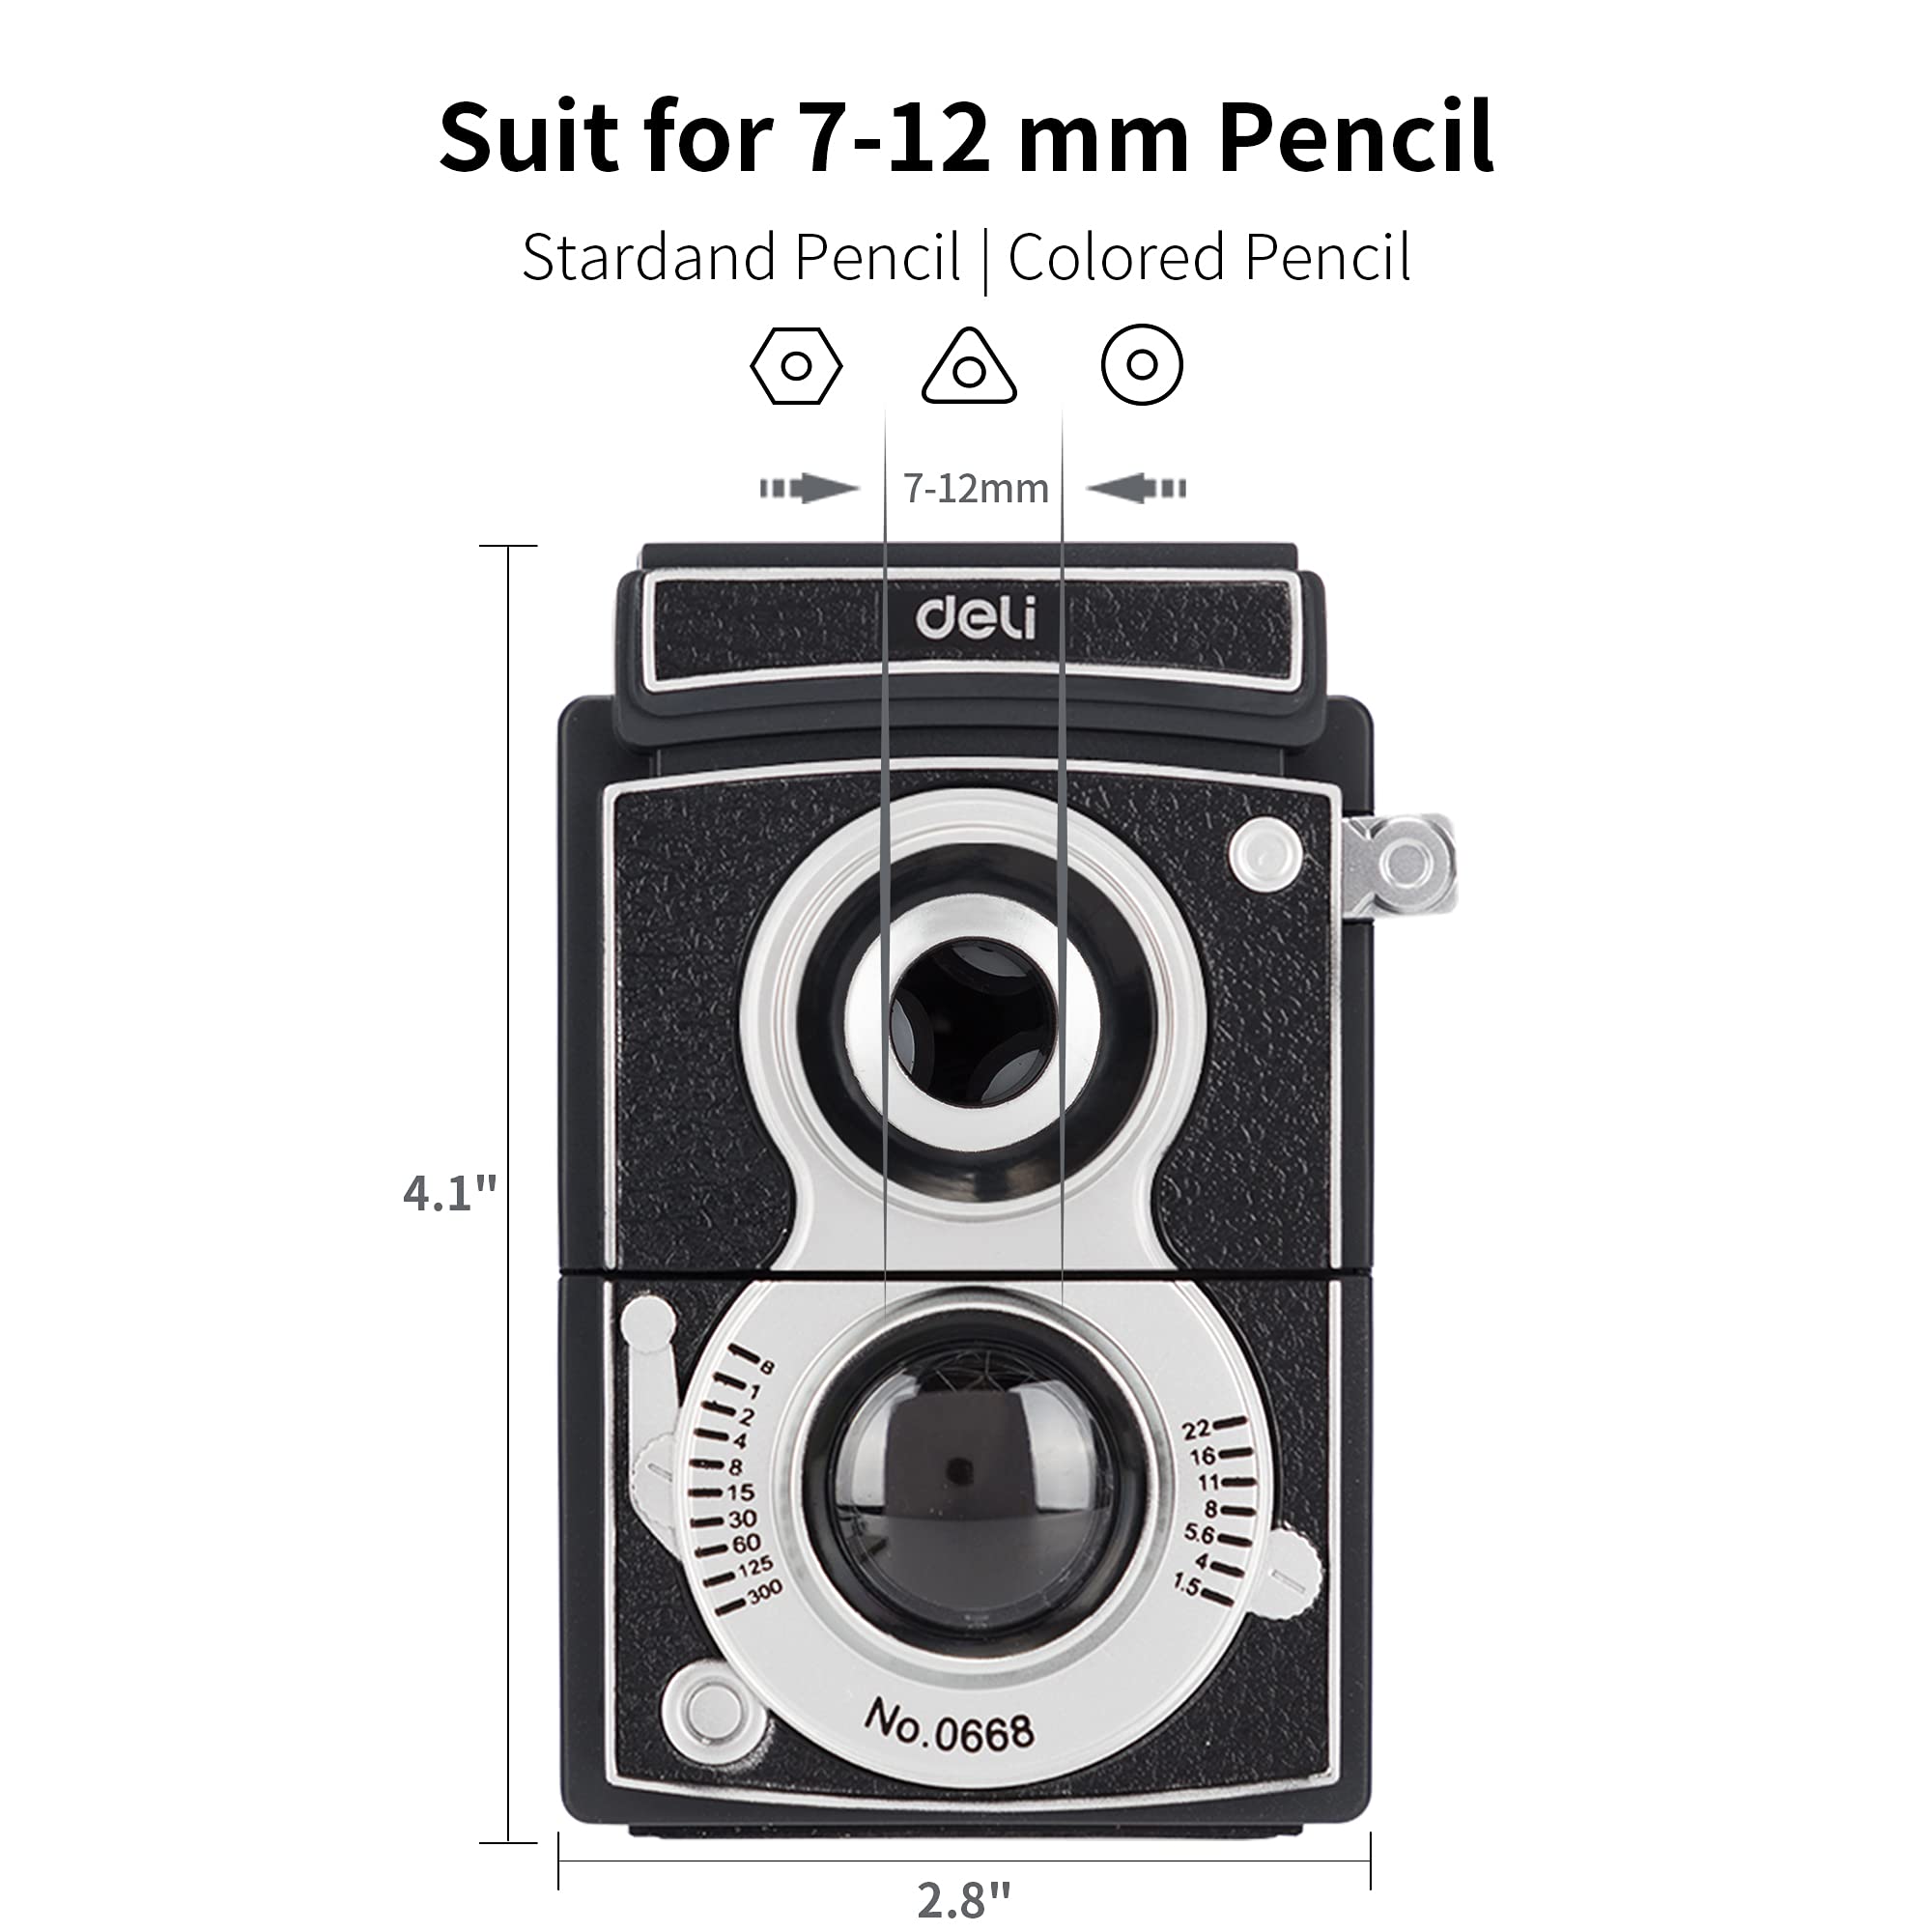 Camera Pencil Sharpener, Adjustable Pencil Point